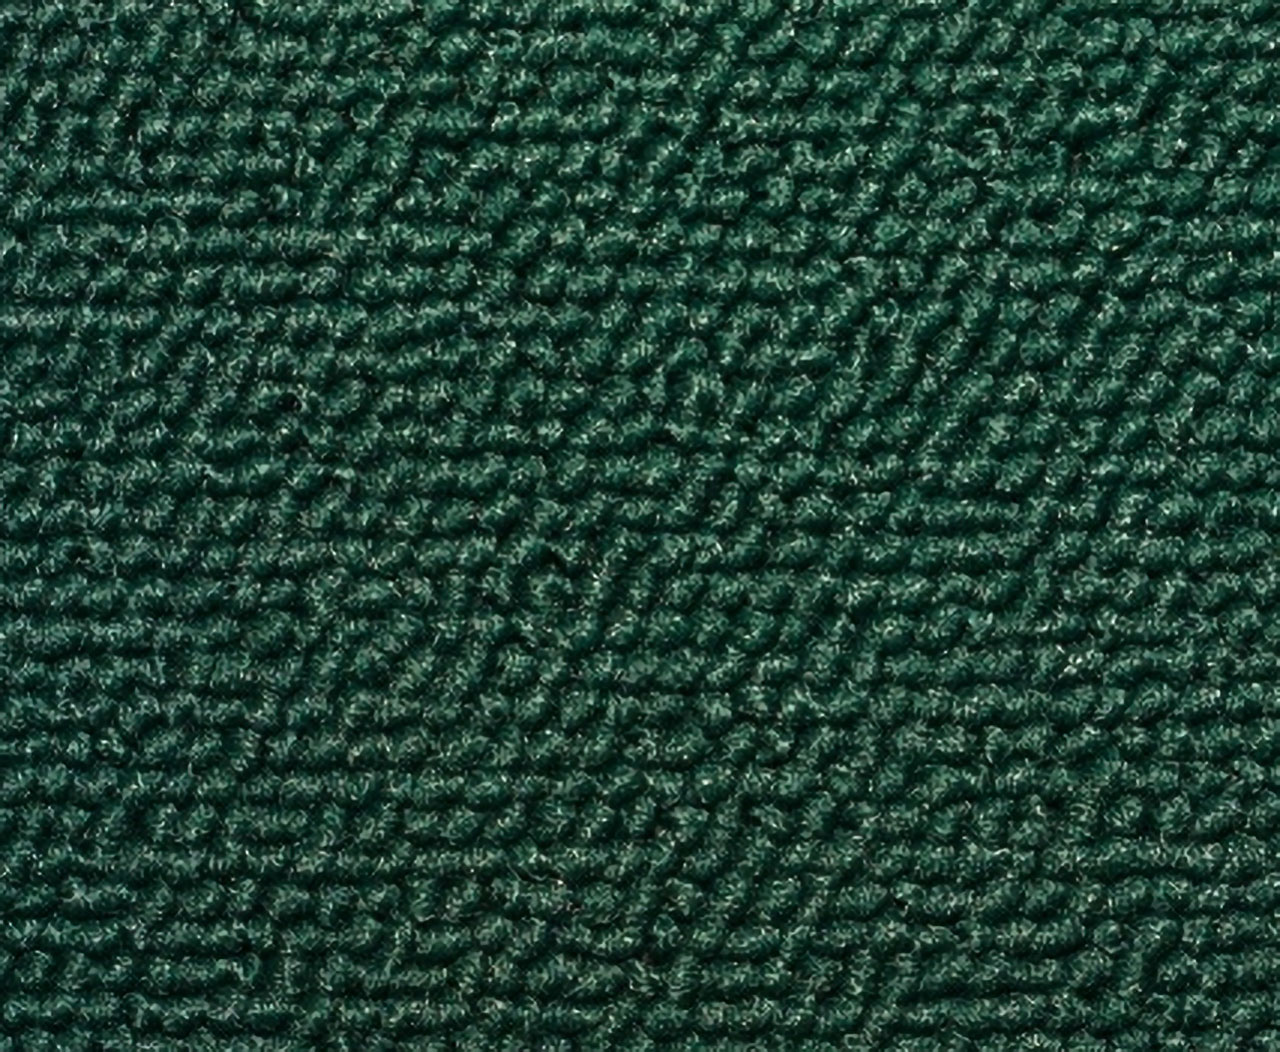 Holden Kingswood HX Kingswood Ute 45Y Jade Green Carpet (Image 1 of 1)